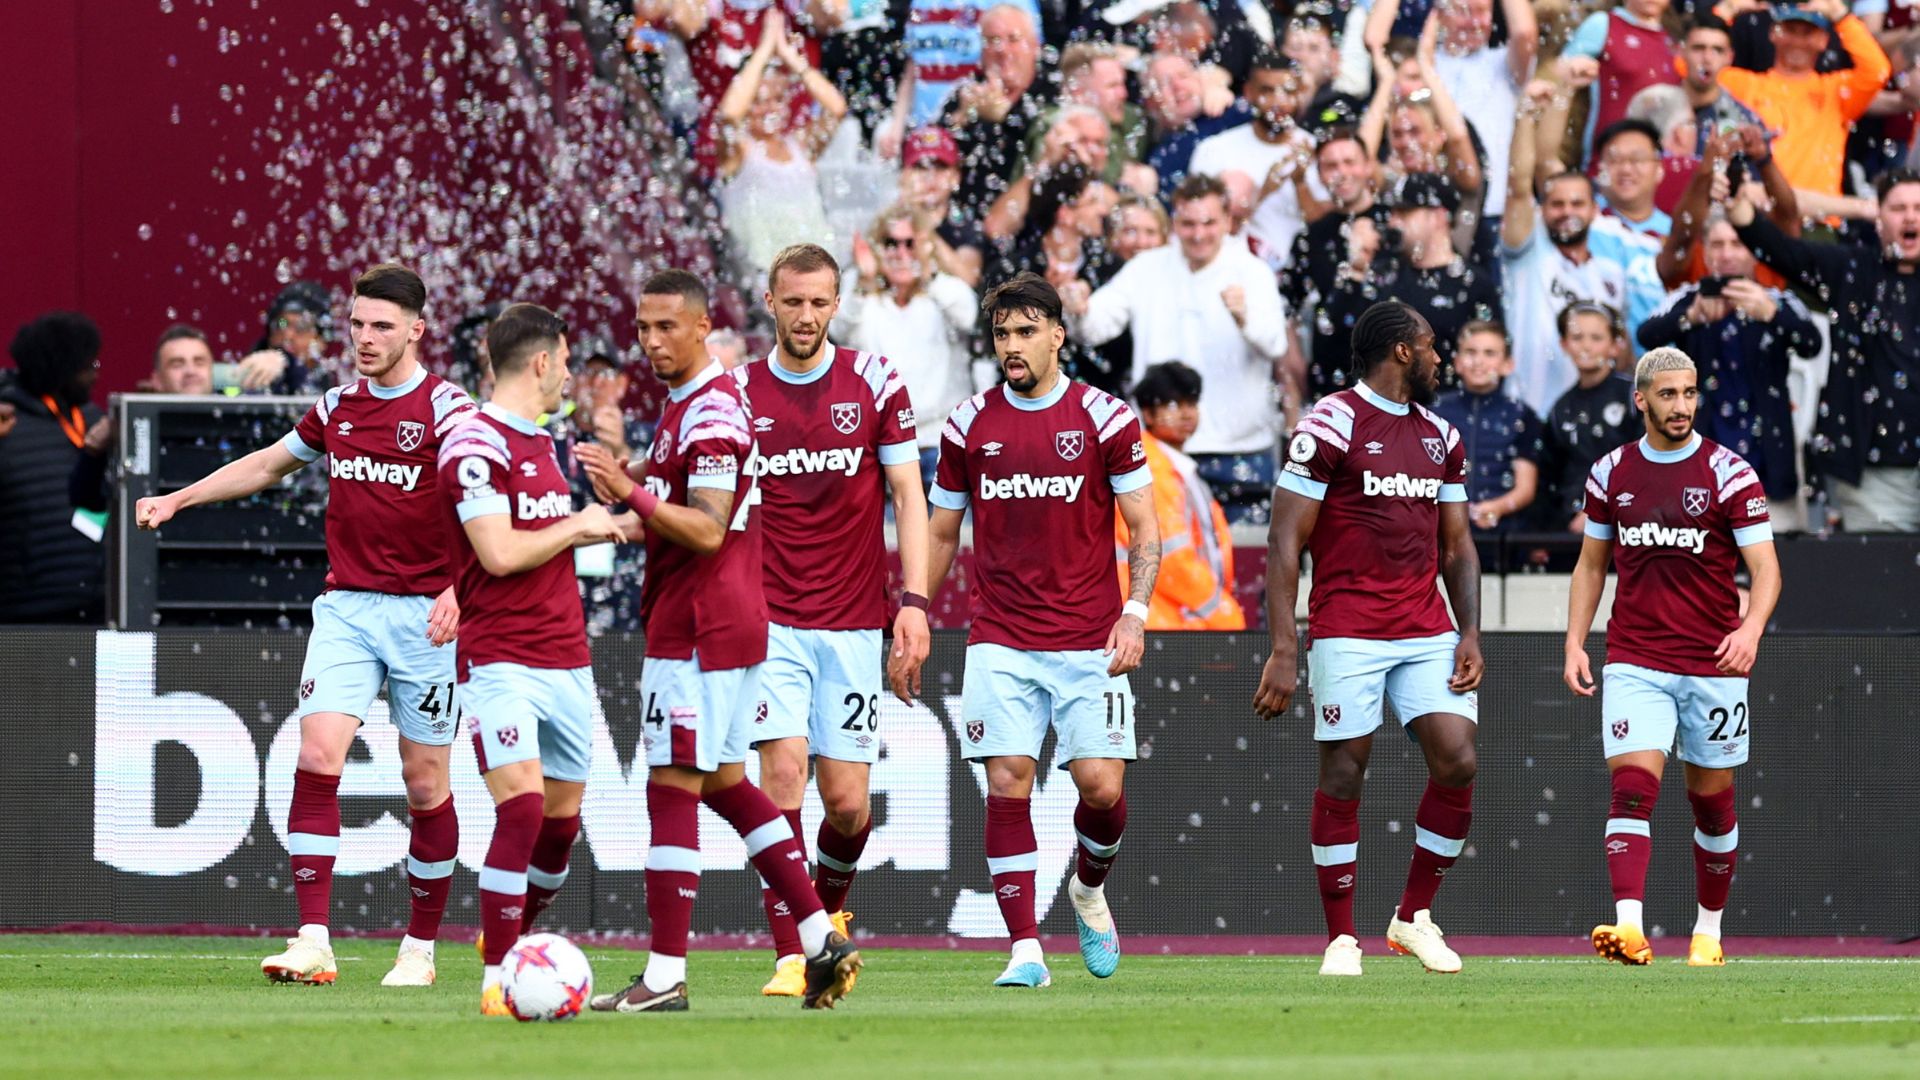 West Ham goal celebration (Credit: Getty Images)